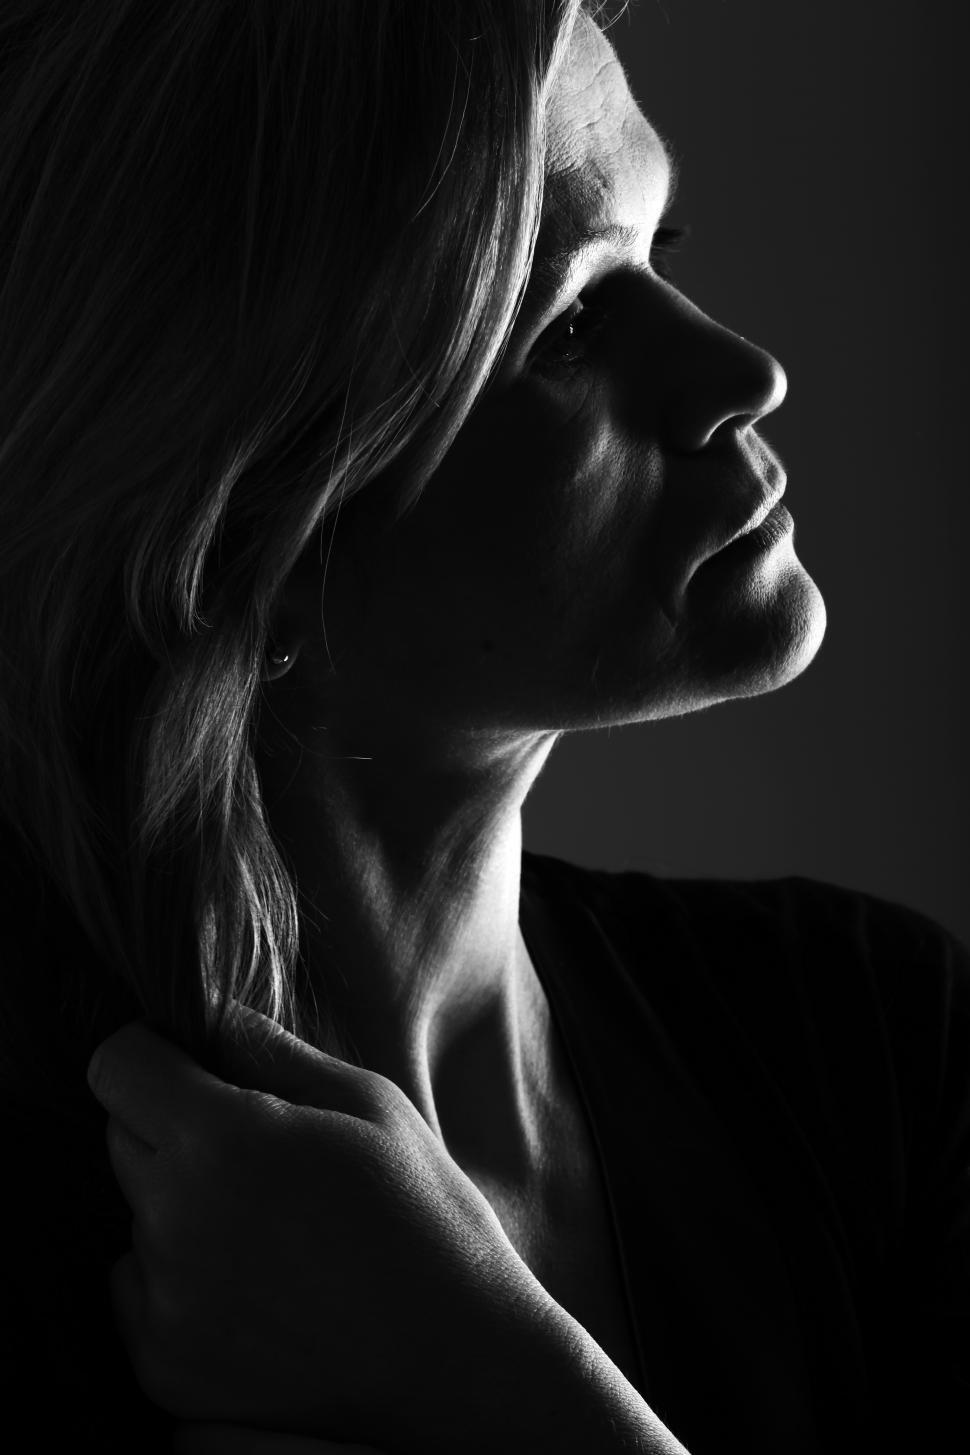 Free Image of Woman, black and white, high key lighting 